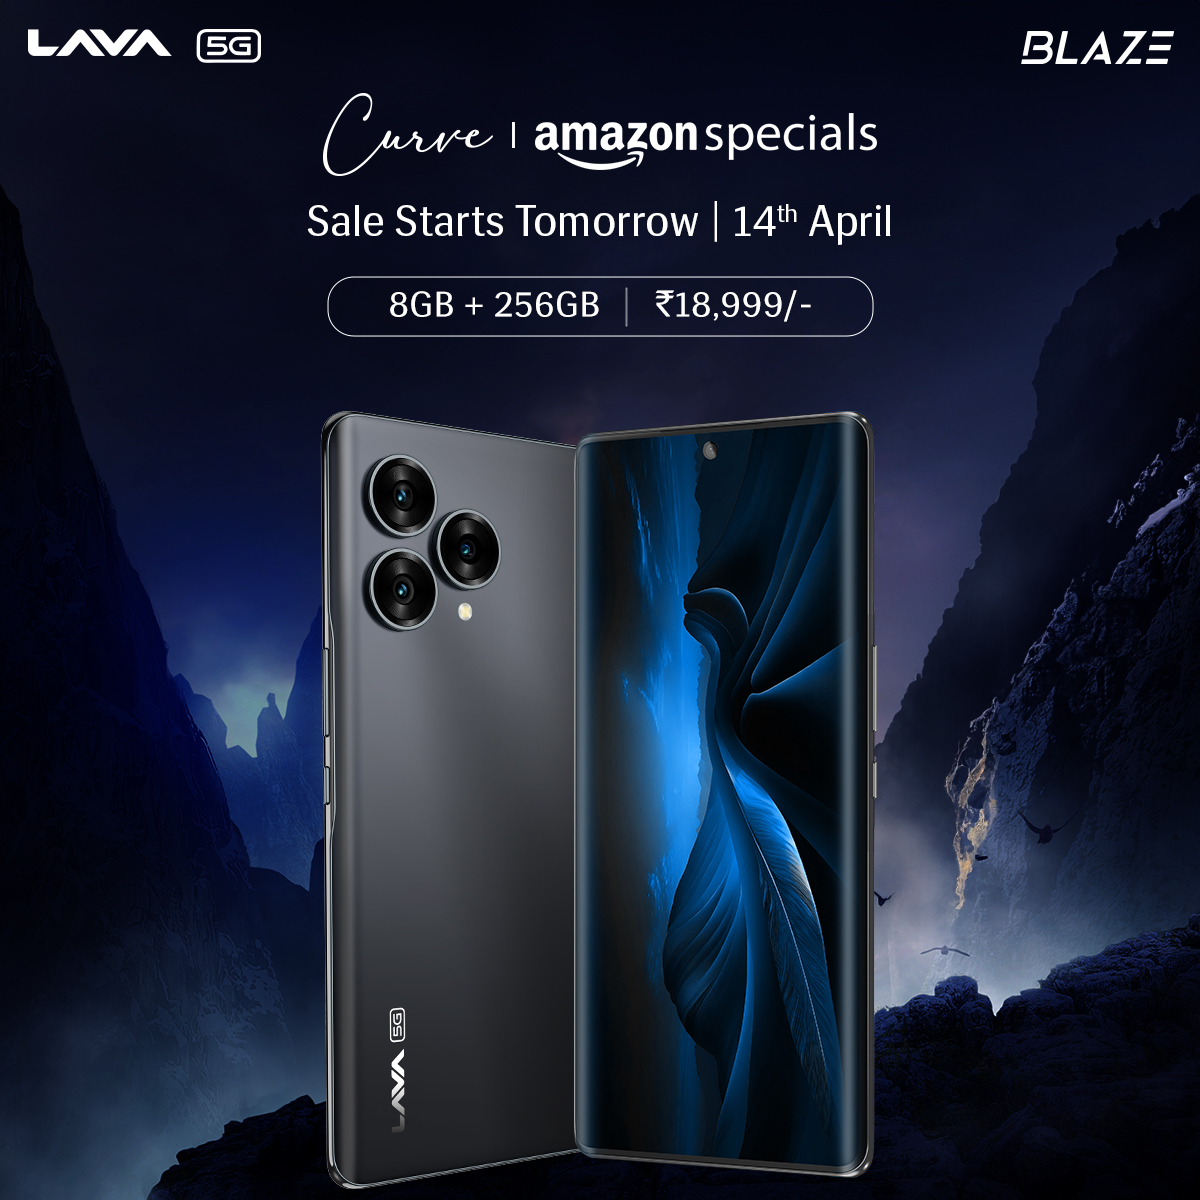 Blaze Curve: 8GB + 256GB - Sale starts tomorrow, 14th April Price: ₹18,999 Only on Amazon: amzn.to/439QGPa #BlazeCurve #LavaBlazeCurve #CurveOlution #LavaMobiles #ProudlyIndian